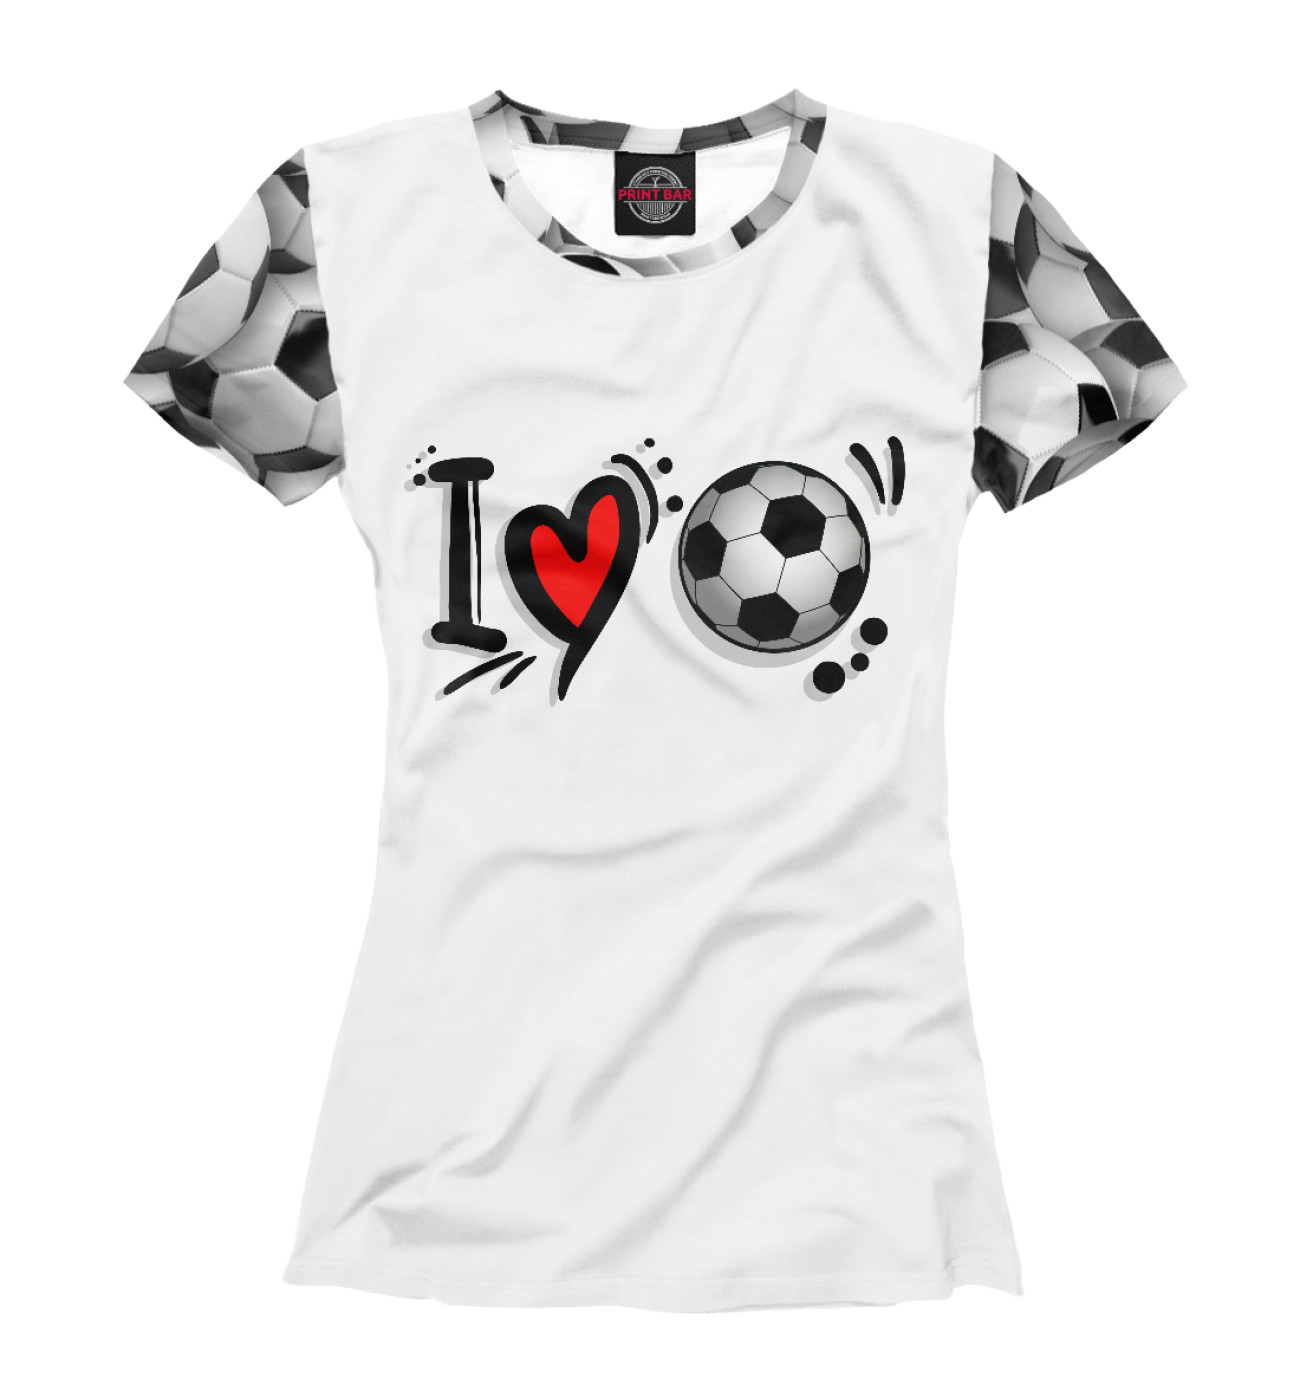 Женская Футболка Я люблю футбол, артикул: FTO-686132-fut-1